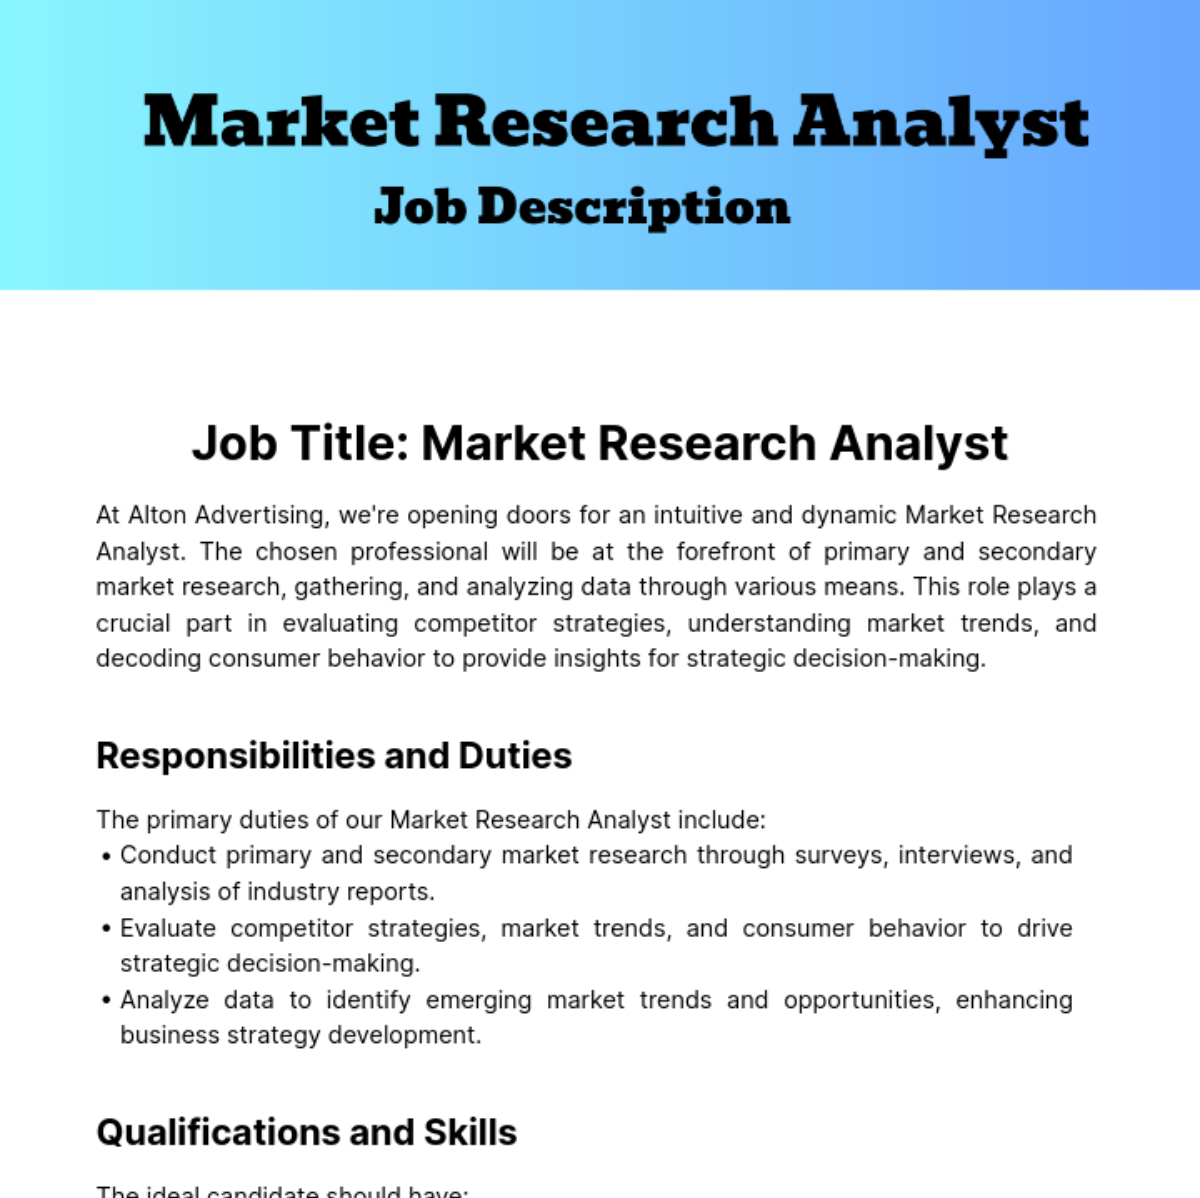 Market Research Analyst Job Description Template